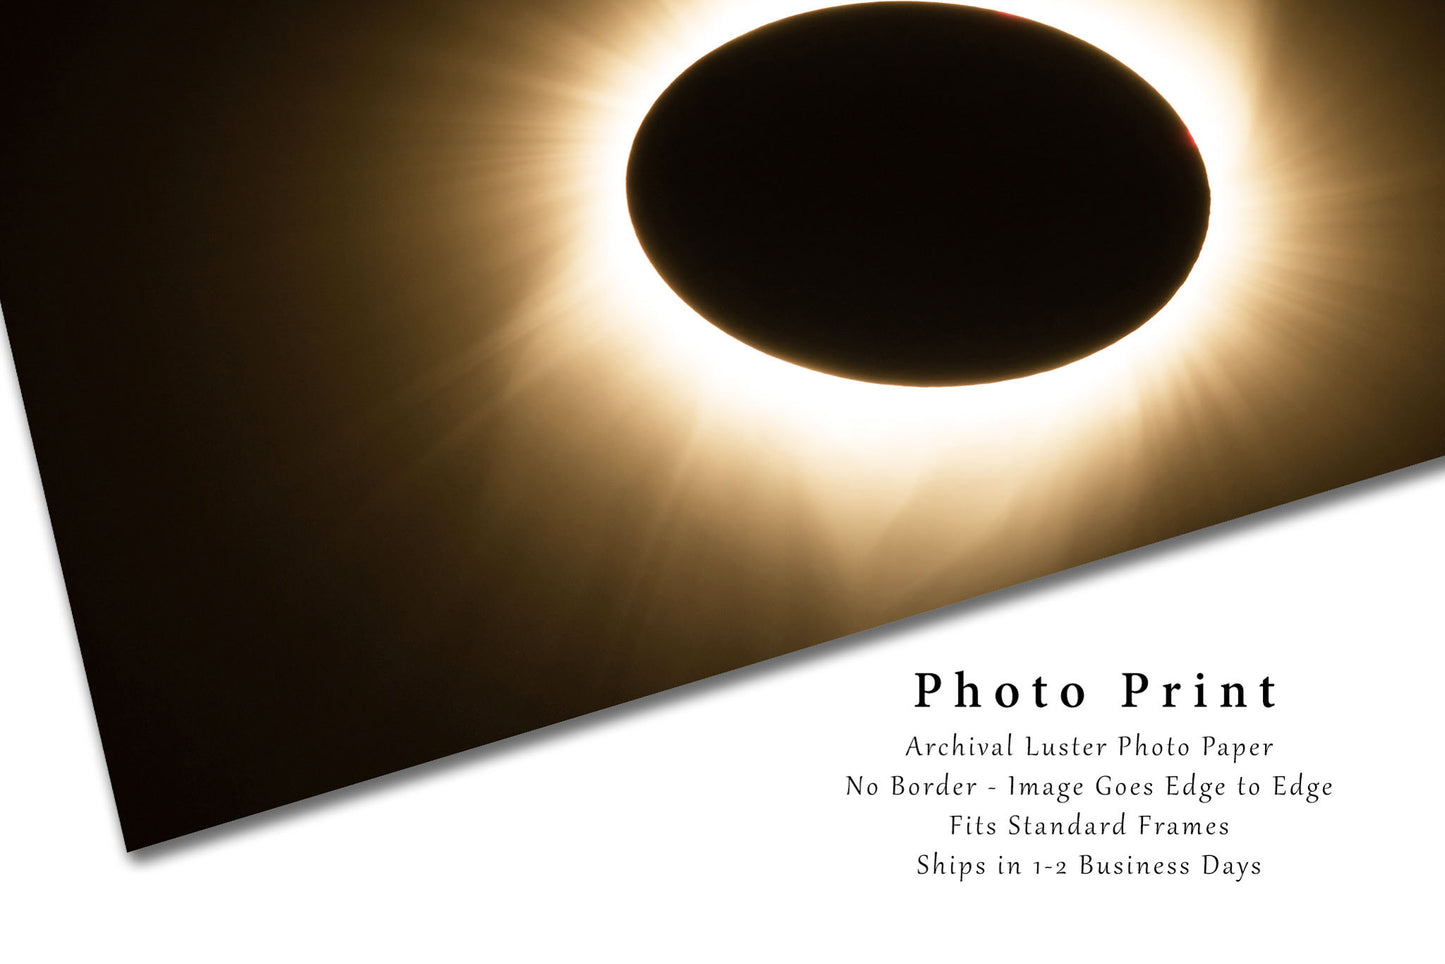 Total Solar Eclipse Photography Print | Celestial Picture | Nebraska Wall Art | Sun Moon Photo | Science Decor | Not Framed